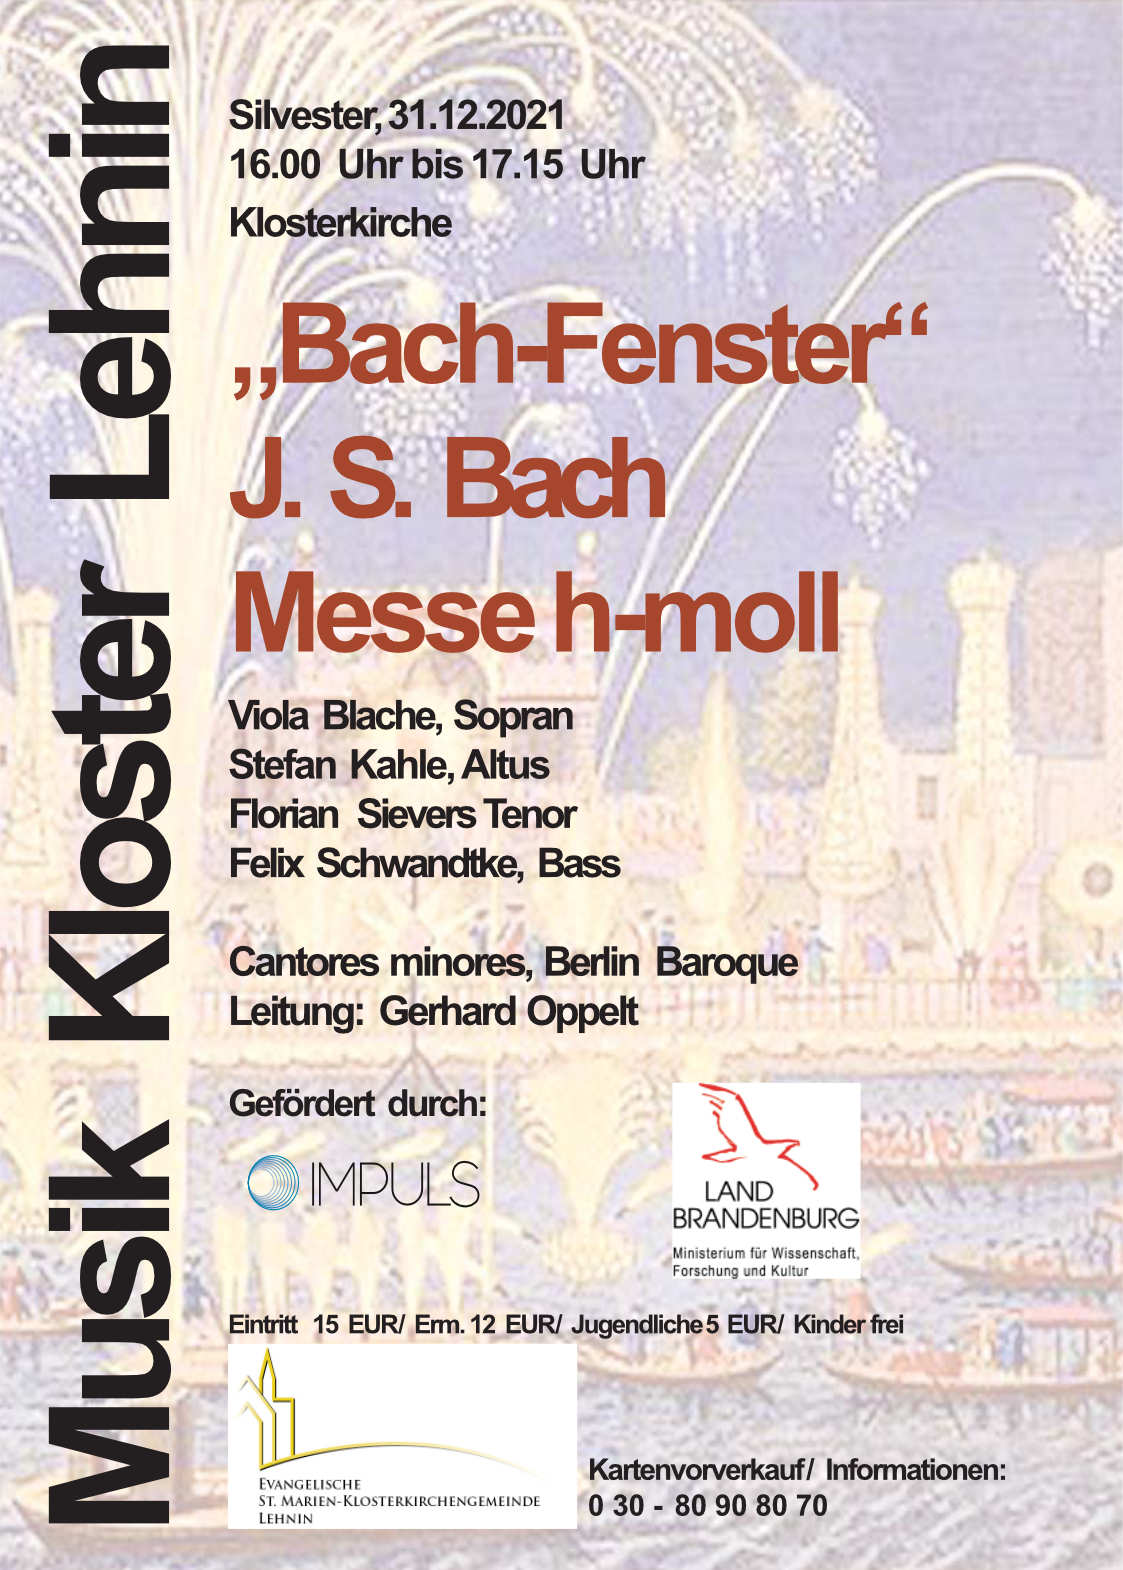 Silvesterkonzert 2021 in der Klosterkirche Lehnin